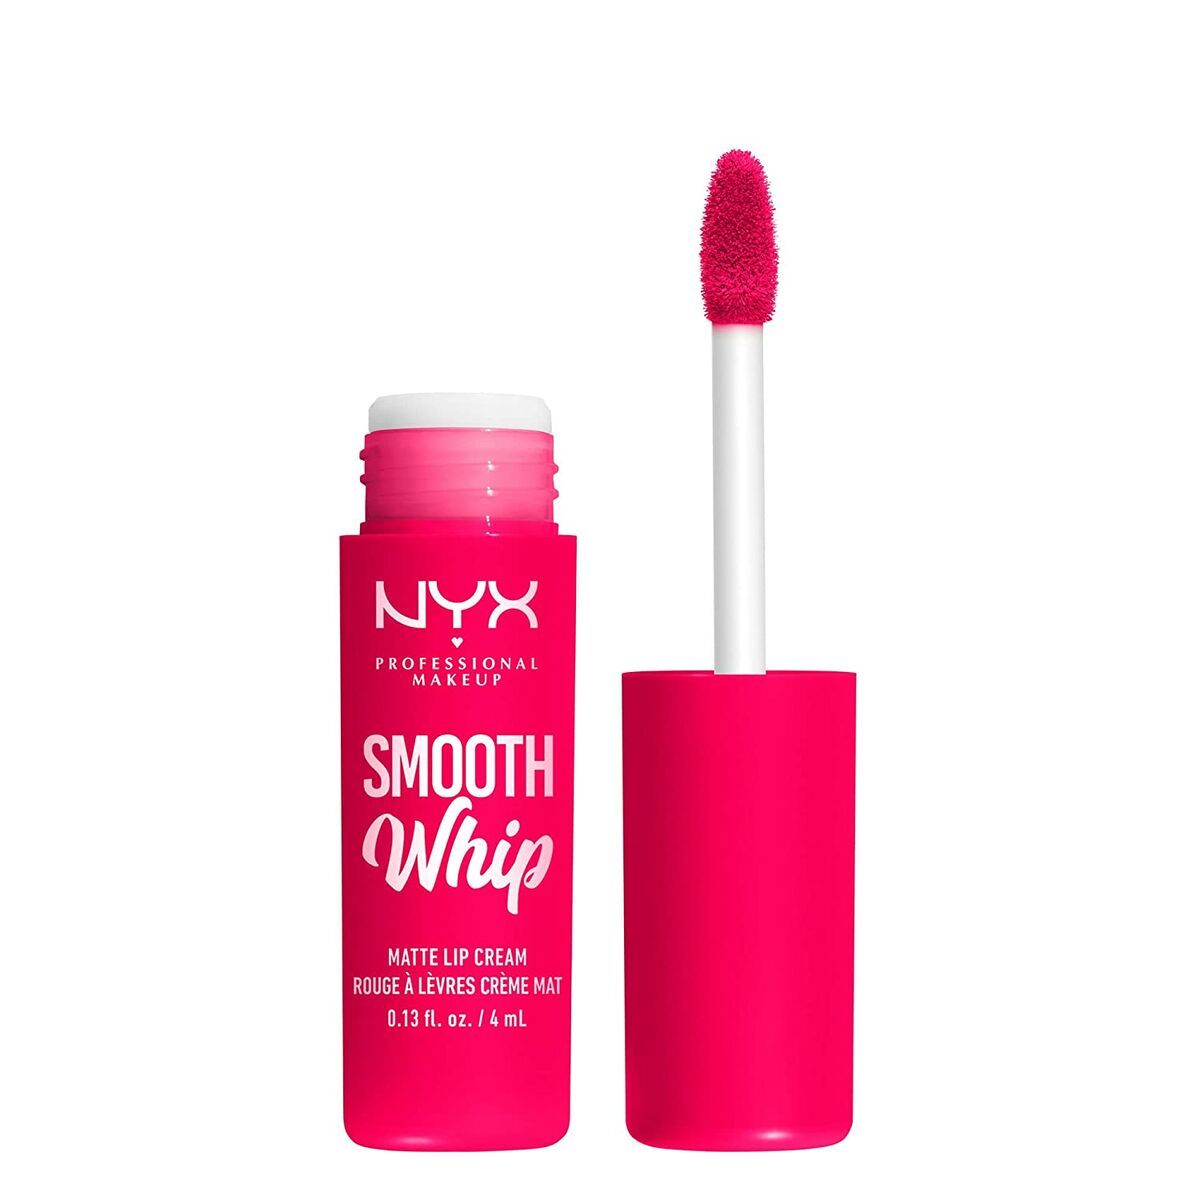 Lipstick Nyx gładka walka mattowa walka (4 ml)